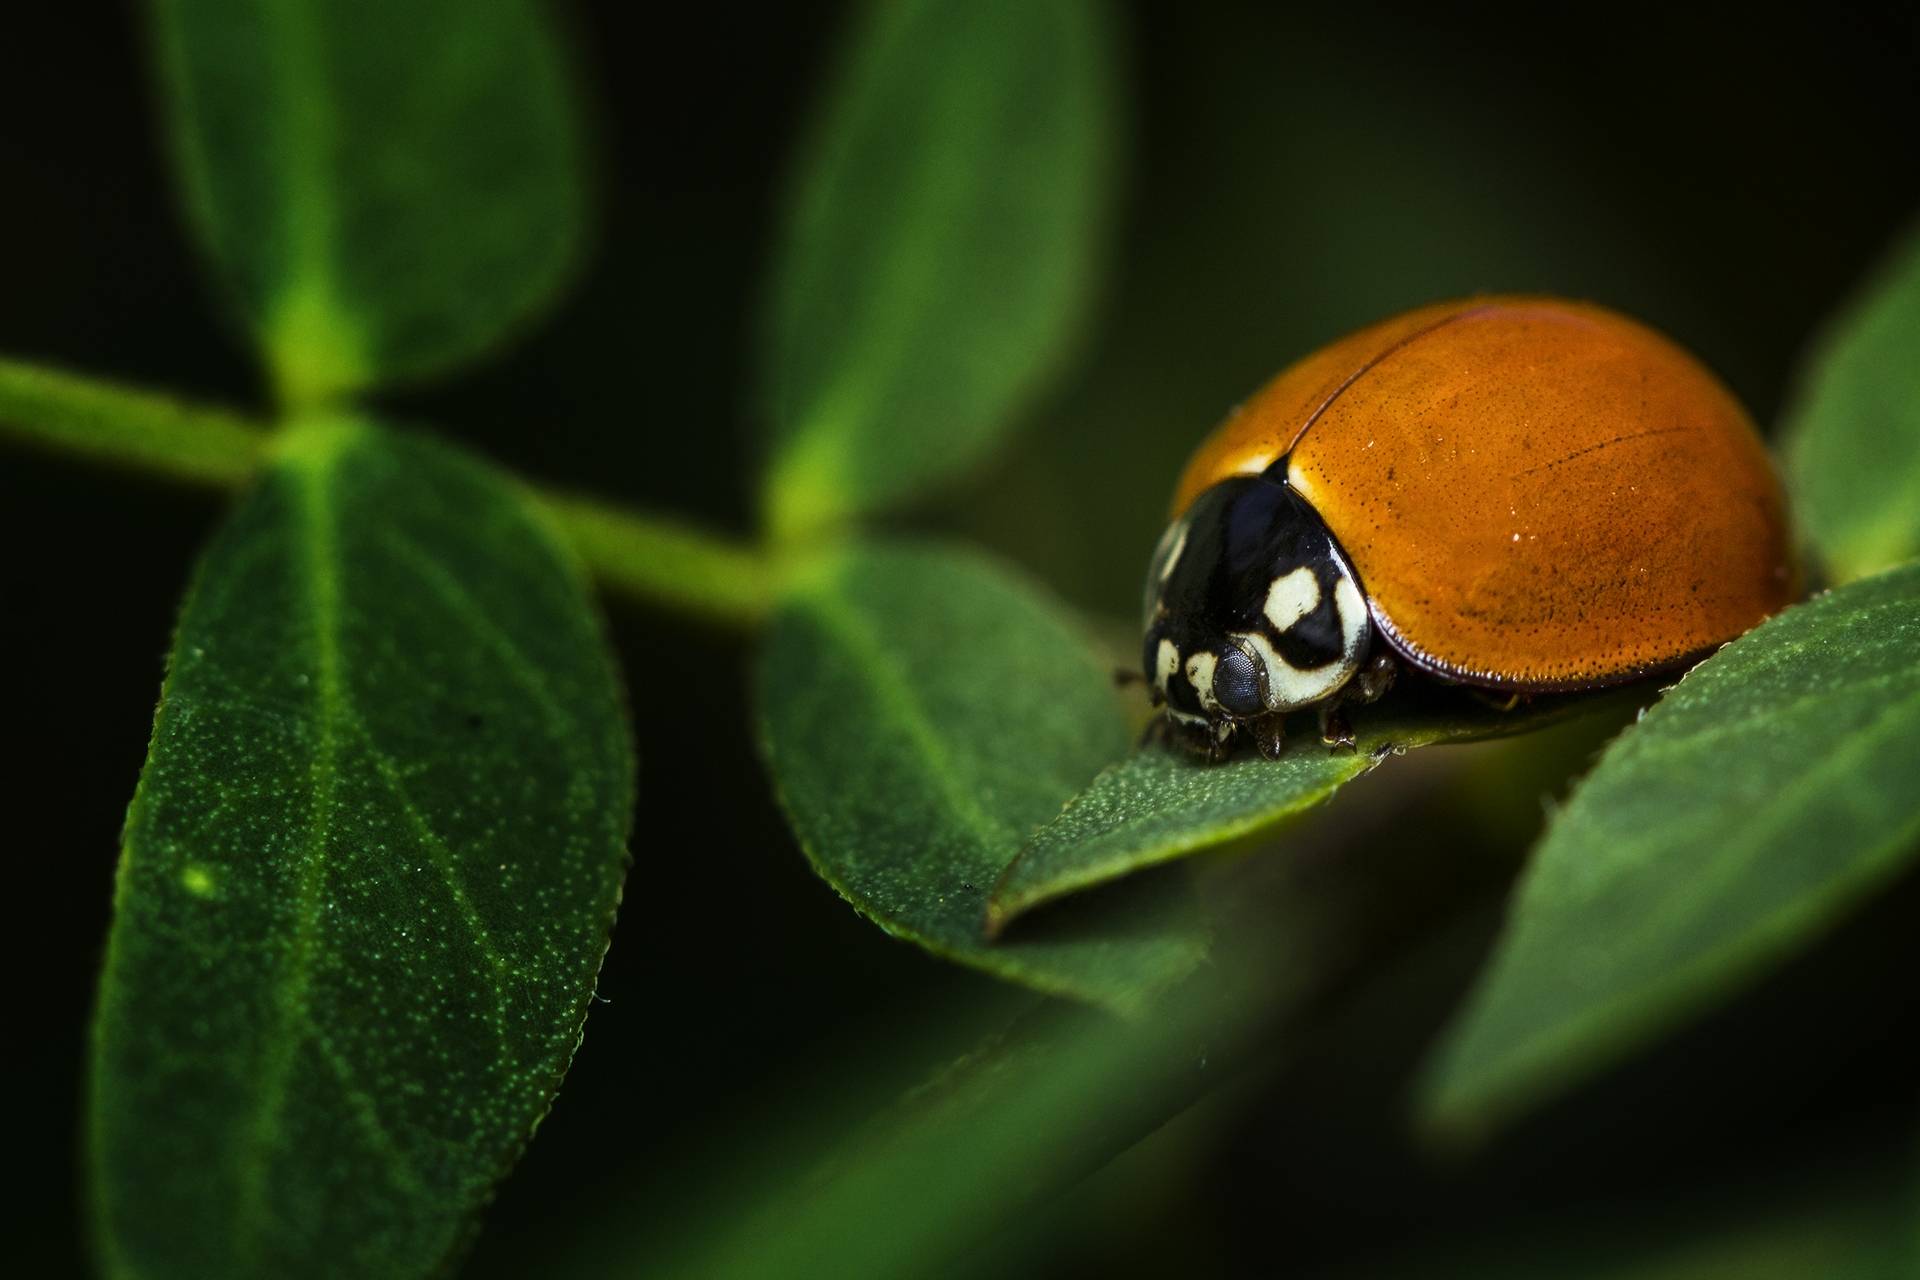 Spotless Ladybeetle - Cycloneda sanguinea